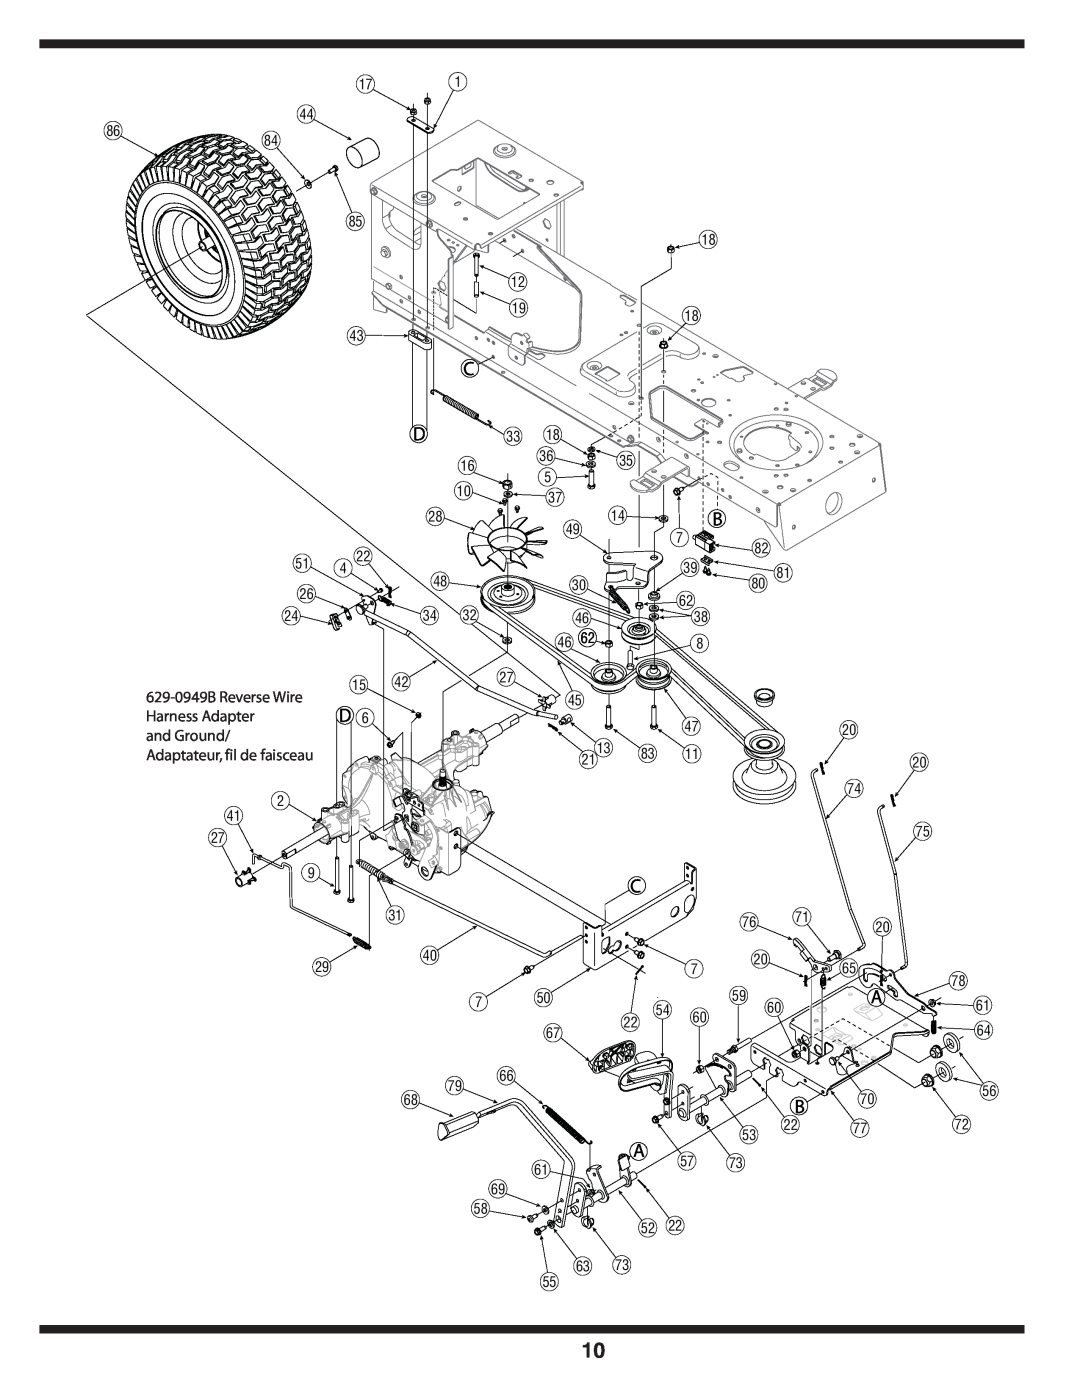 MTD 600 manual Harness Adapter, and Ground, 8684, 629-0949B Reverse Wire, Adaptateur, fil de faisceau, A 61, 7772 